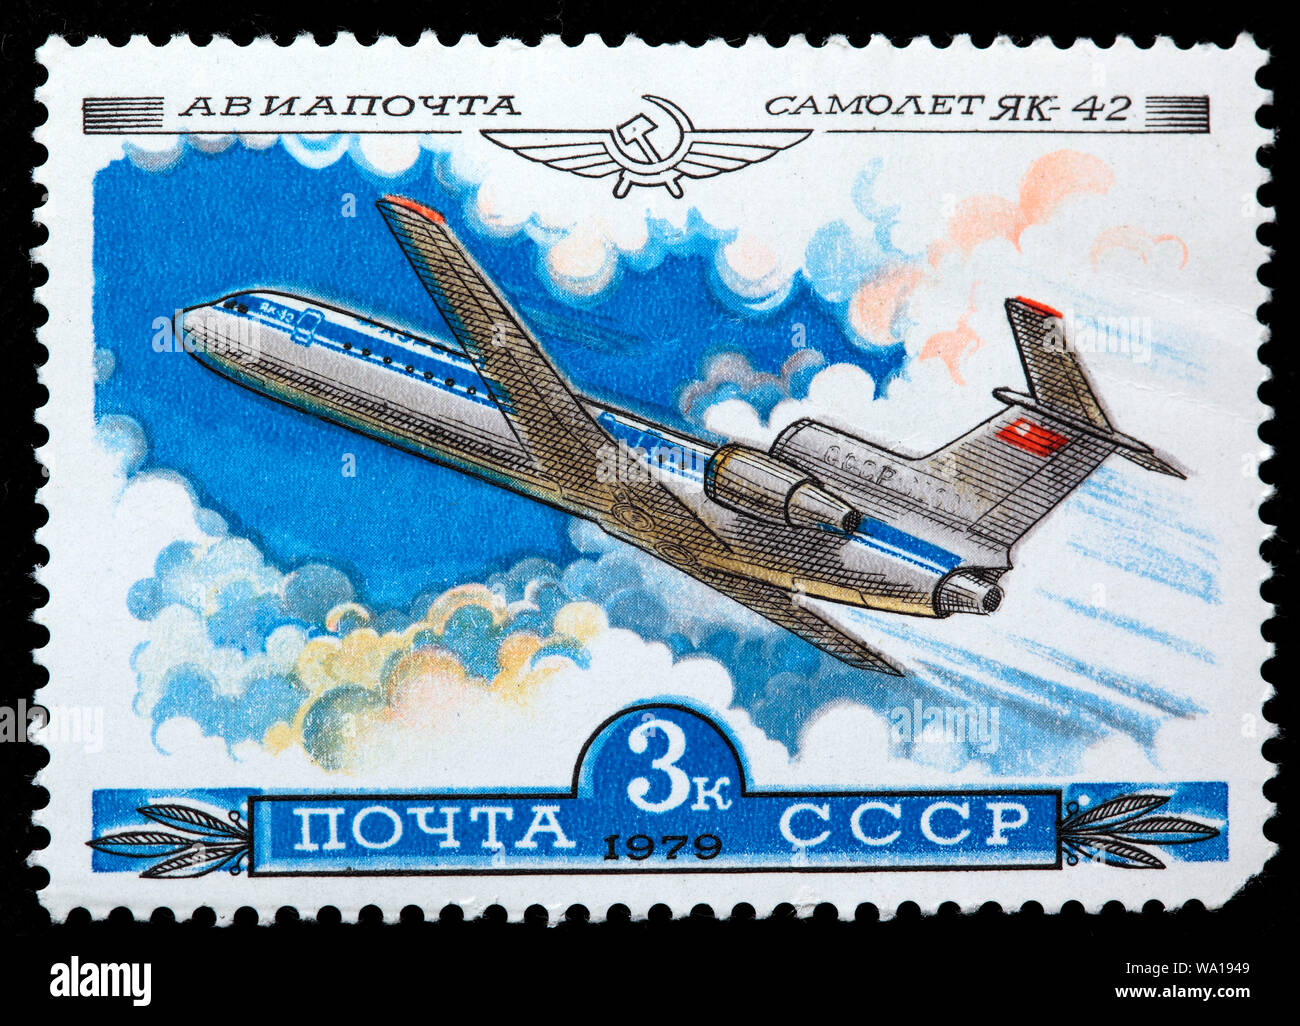 Yakovlev Yak-42 aircraft, postage stamp, Russia, USSR, 1979 Stock Photo